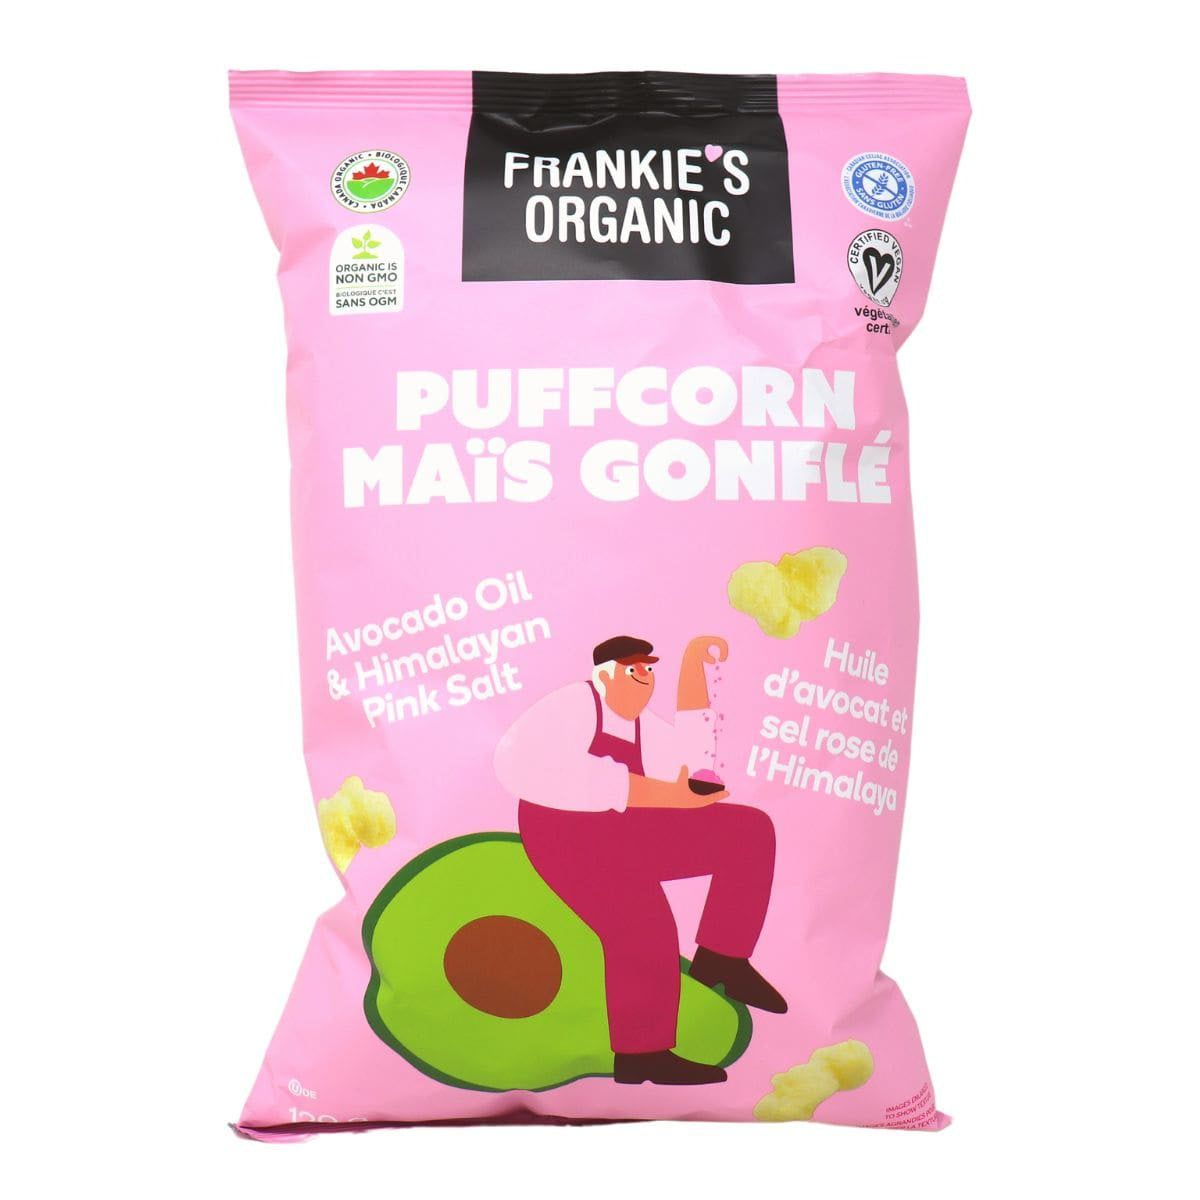 Light pink package of Frankie's Organic Avocado Oil & Himalayan Pink Salt Puffcorn.